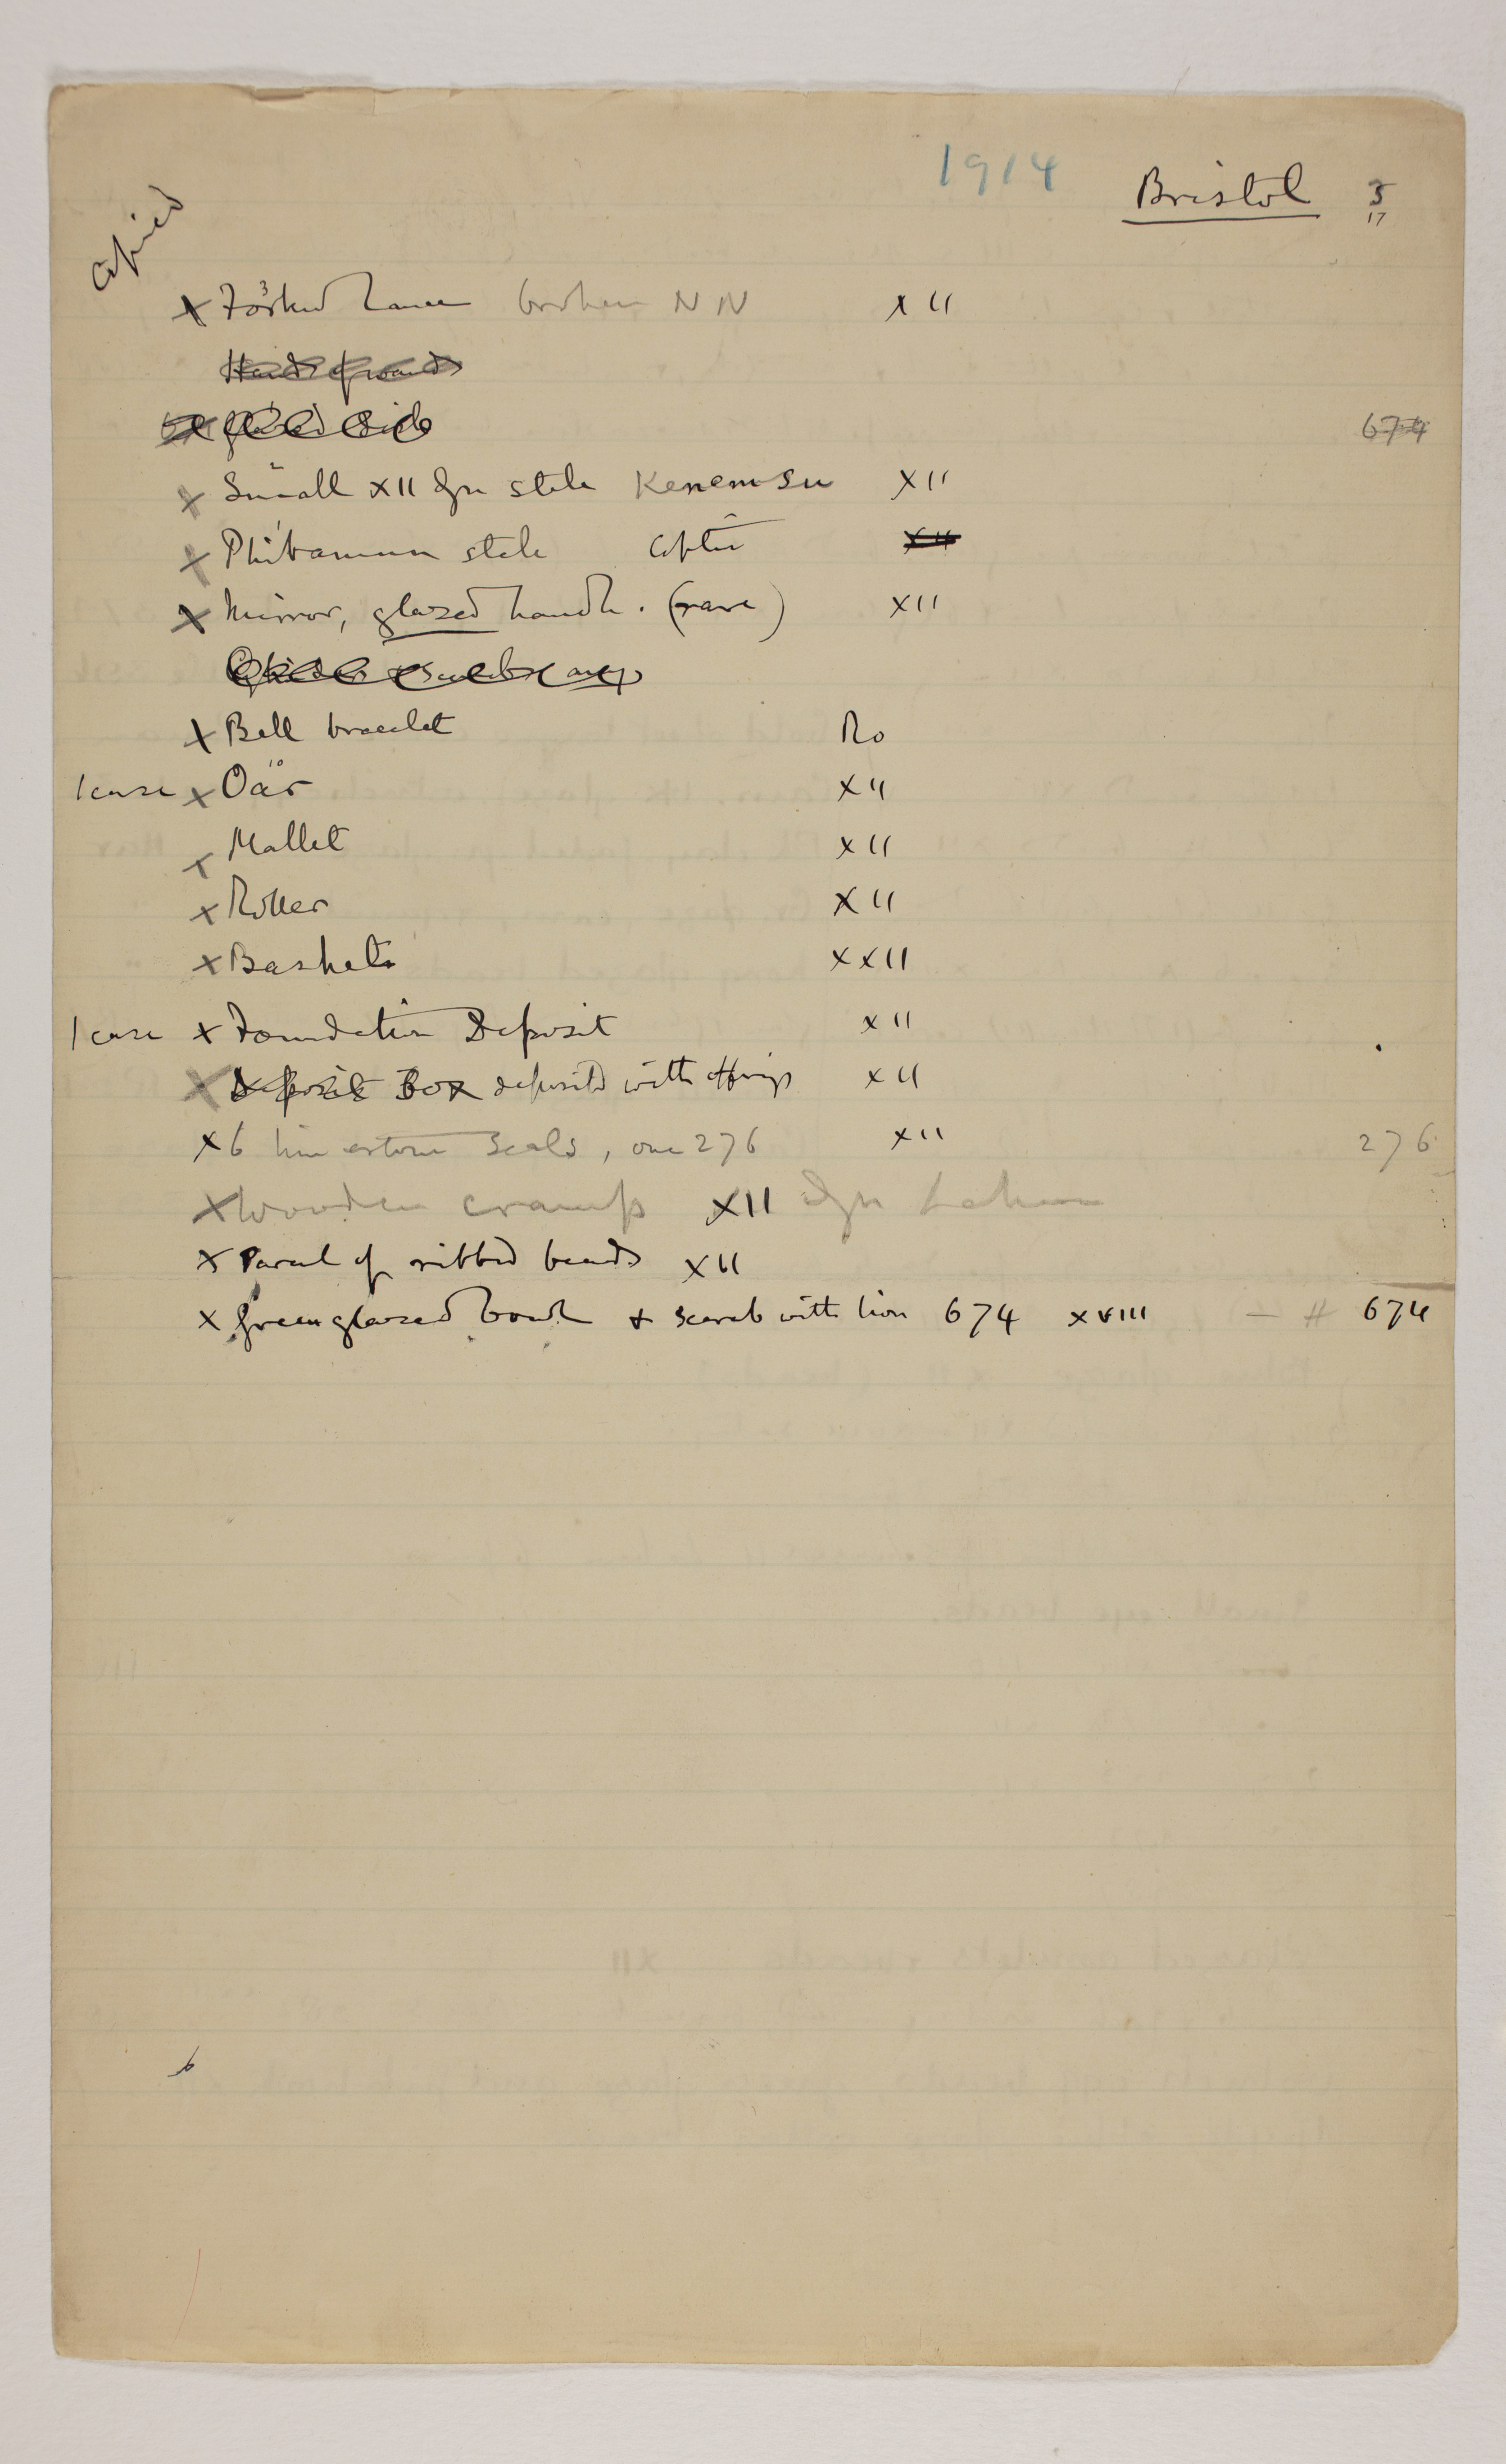 1913-14 Lahun, Haraga Individual institution list  PMA/WFP1/D/22/39.2